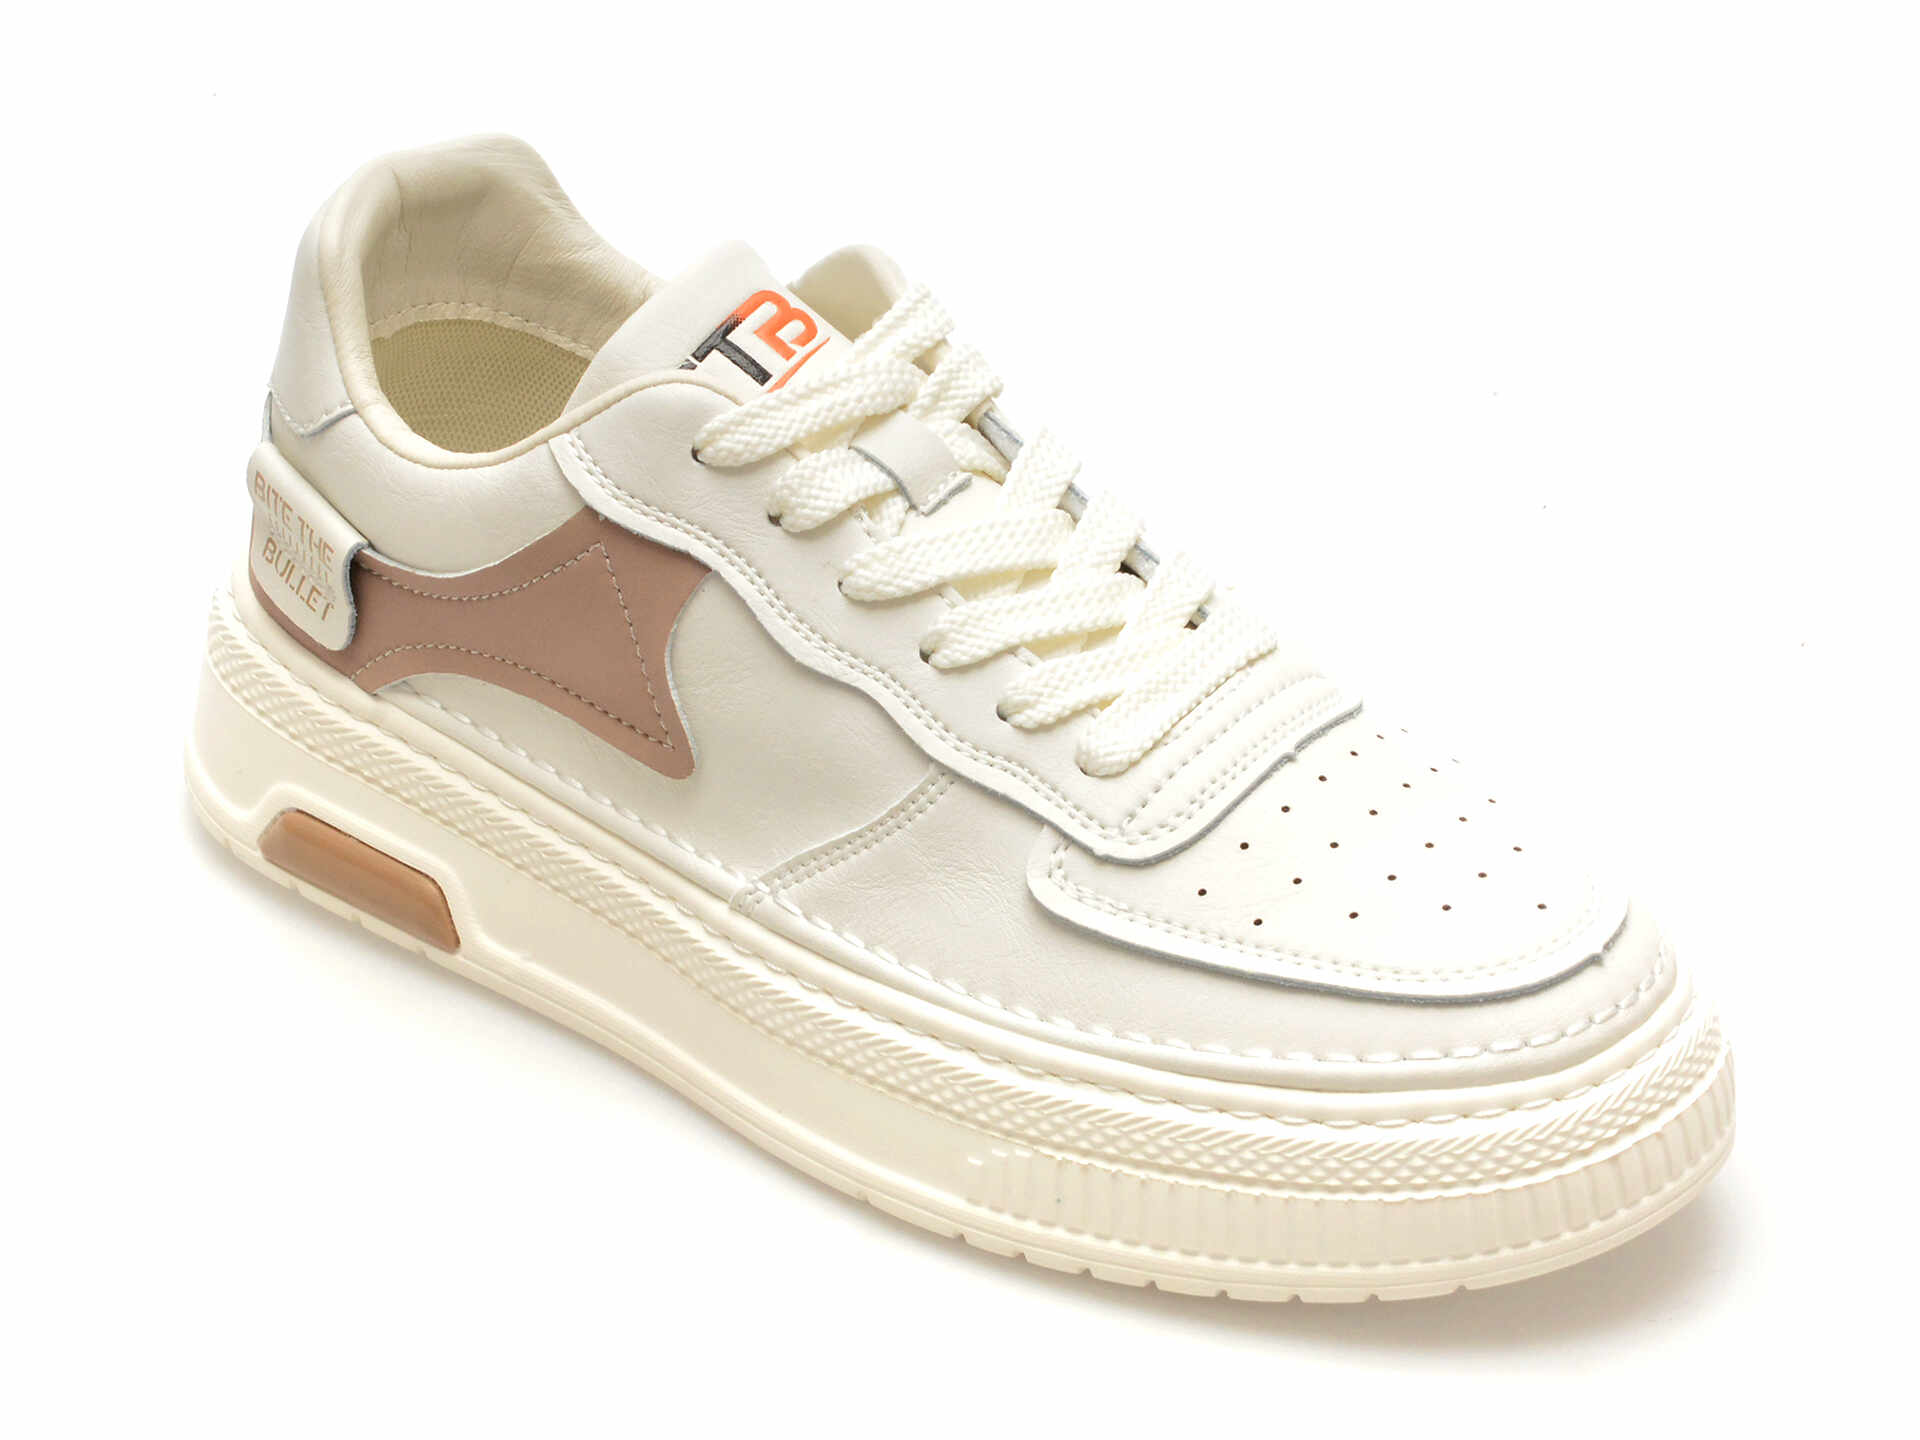 Pantofi BITE THE BULLET albi, K900, din piele naturala